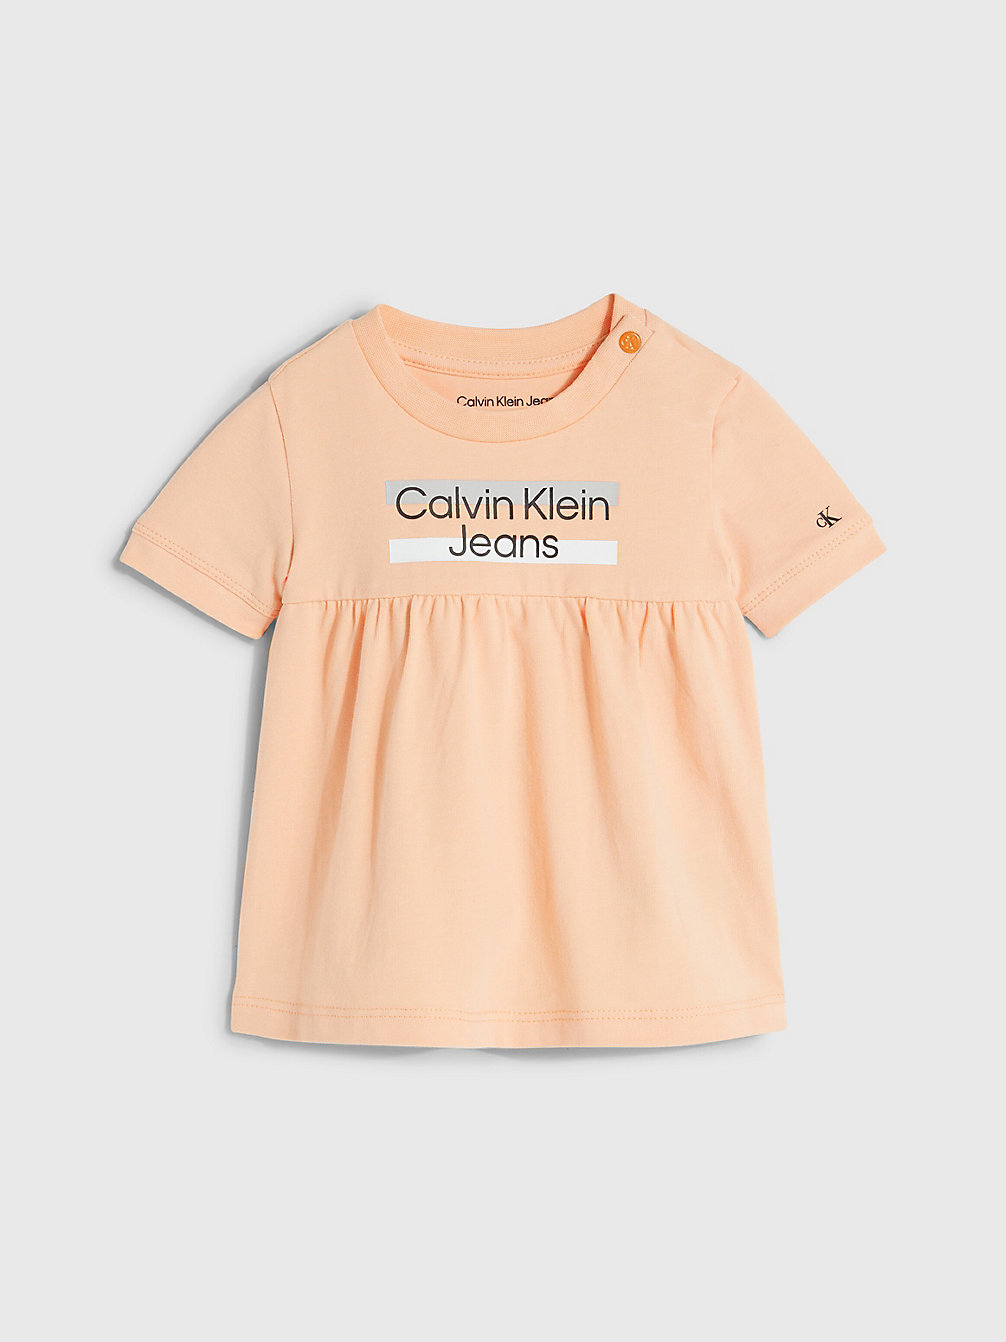 FRESH CANTALOUPE Newborn Logo Dress undefined undefined Calvin Klein